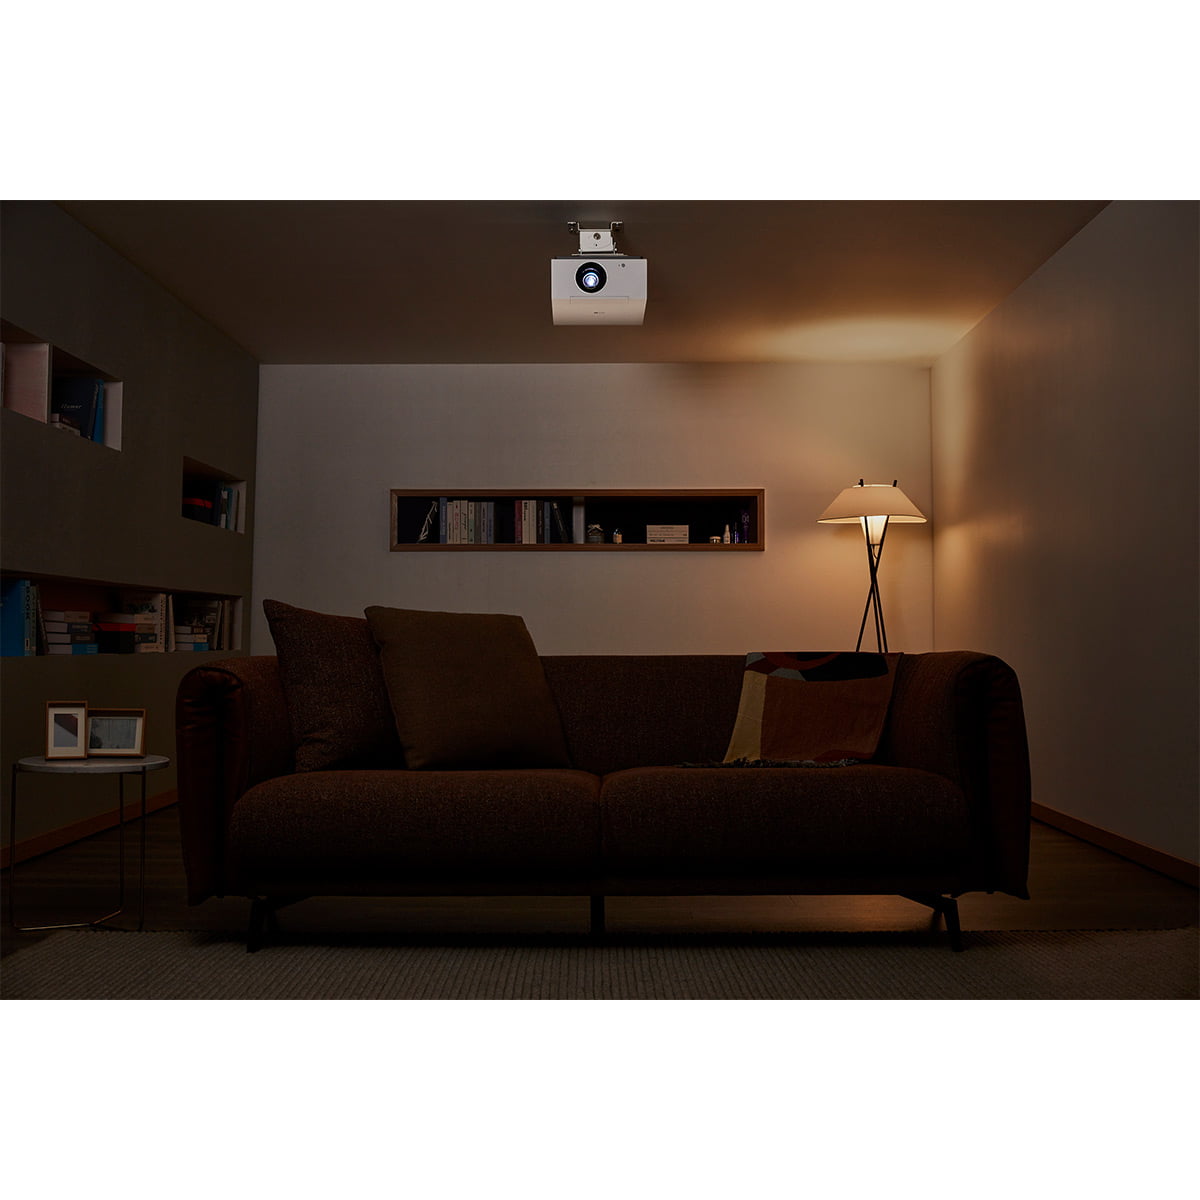 LG HU710PW: Proyector de cine en casa híbrido LG CineBeam HU710P 4K UHD